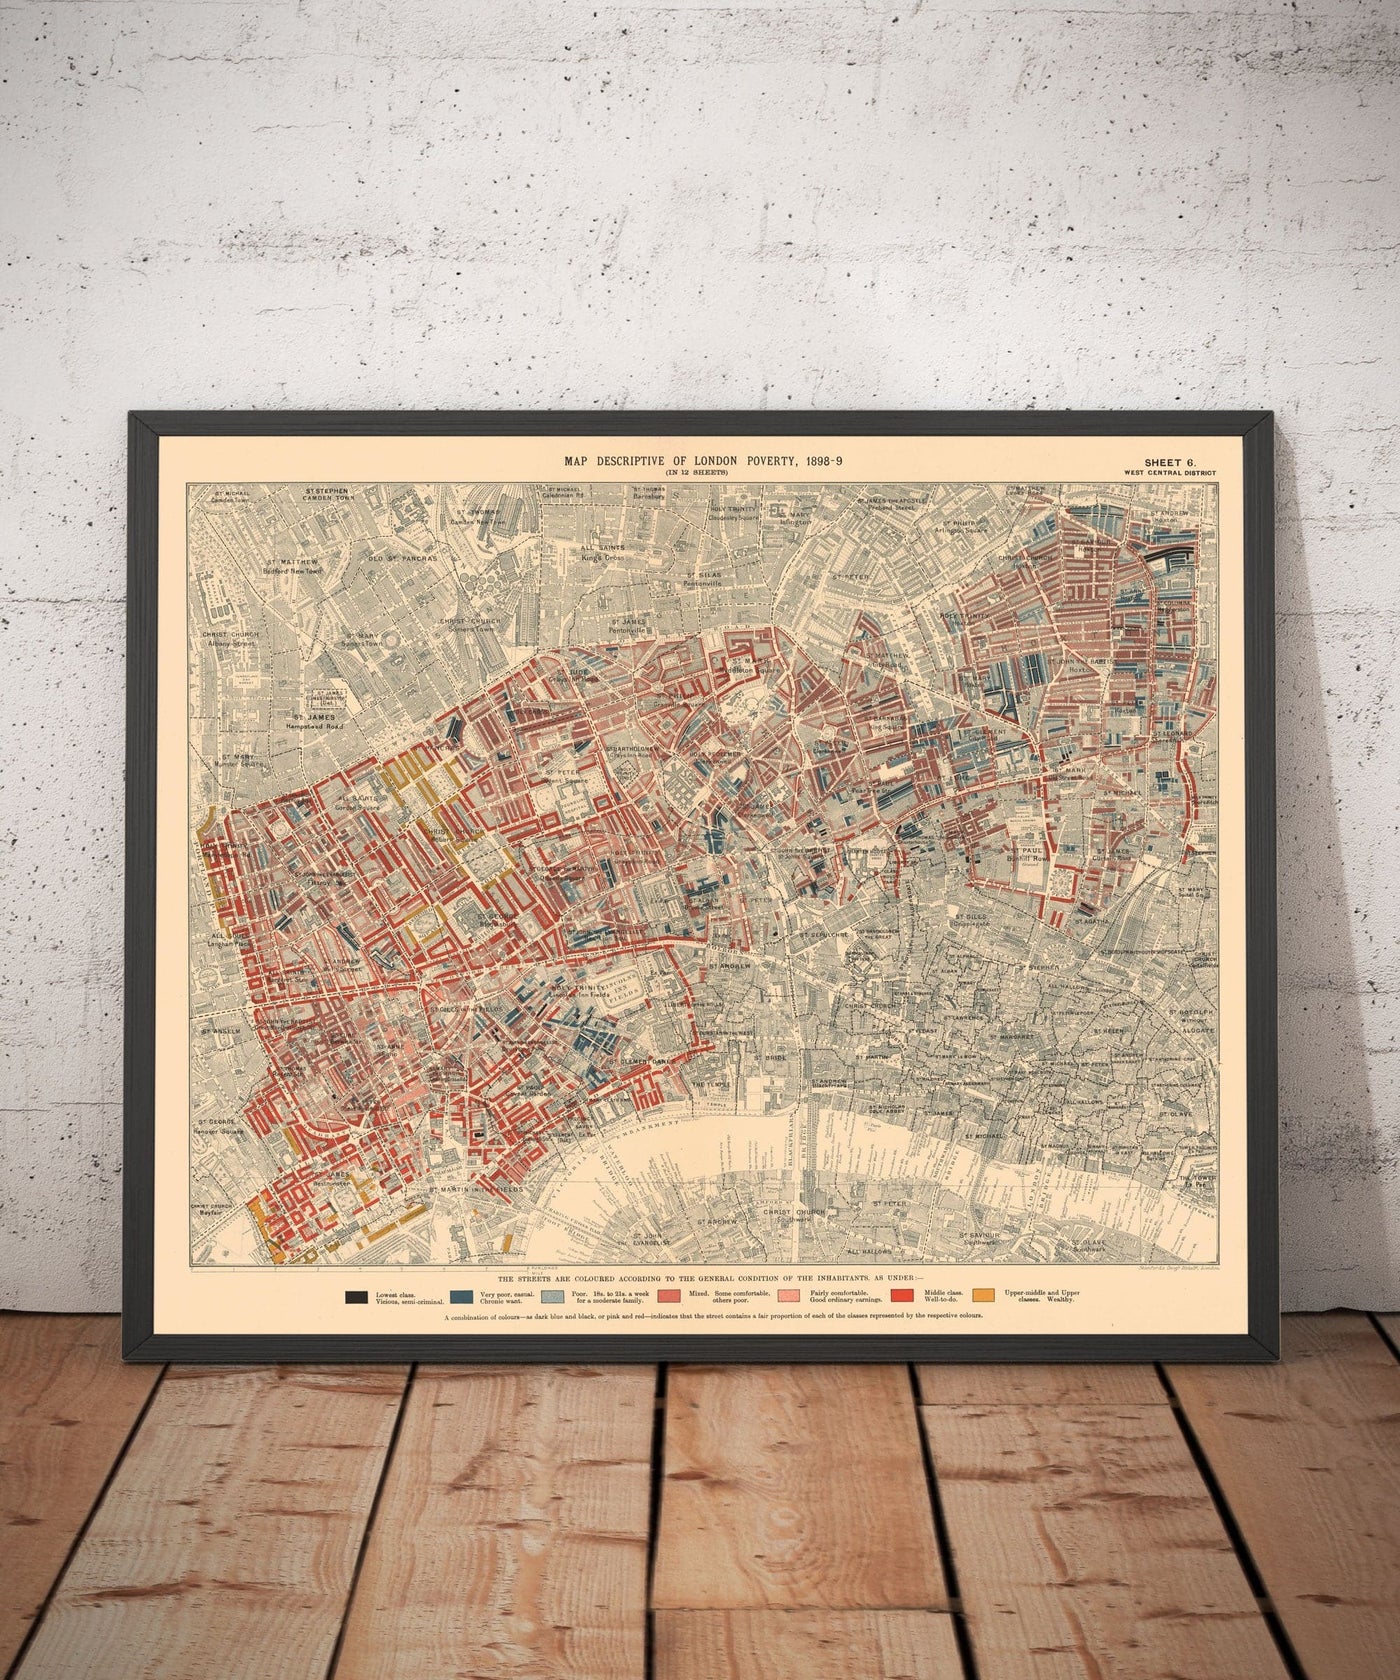 Karte der Londoner Armut 1898-9, West Central District, von Charles Booth - Westminster, Camden, City of London, Islington - W1, WC1, WC2, EC1, N1